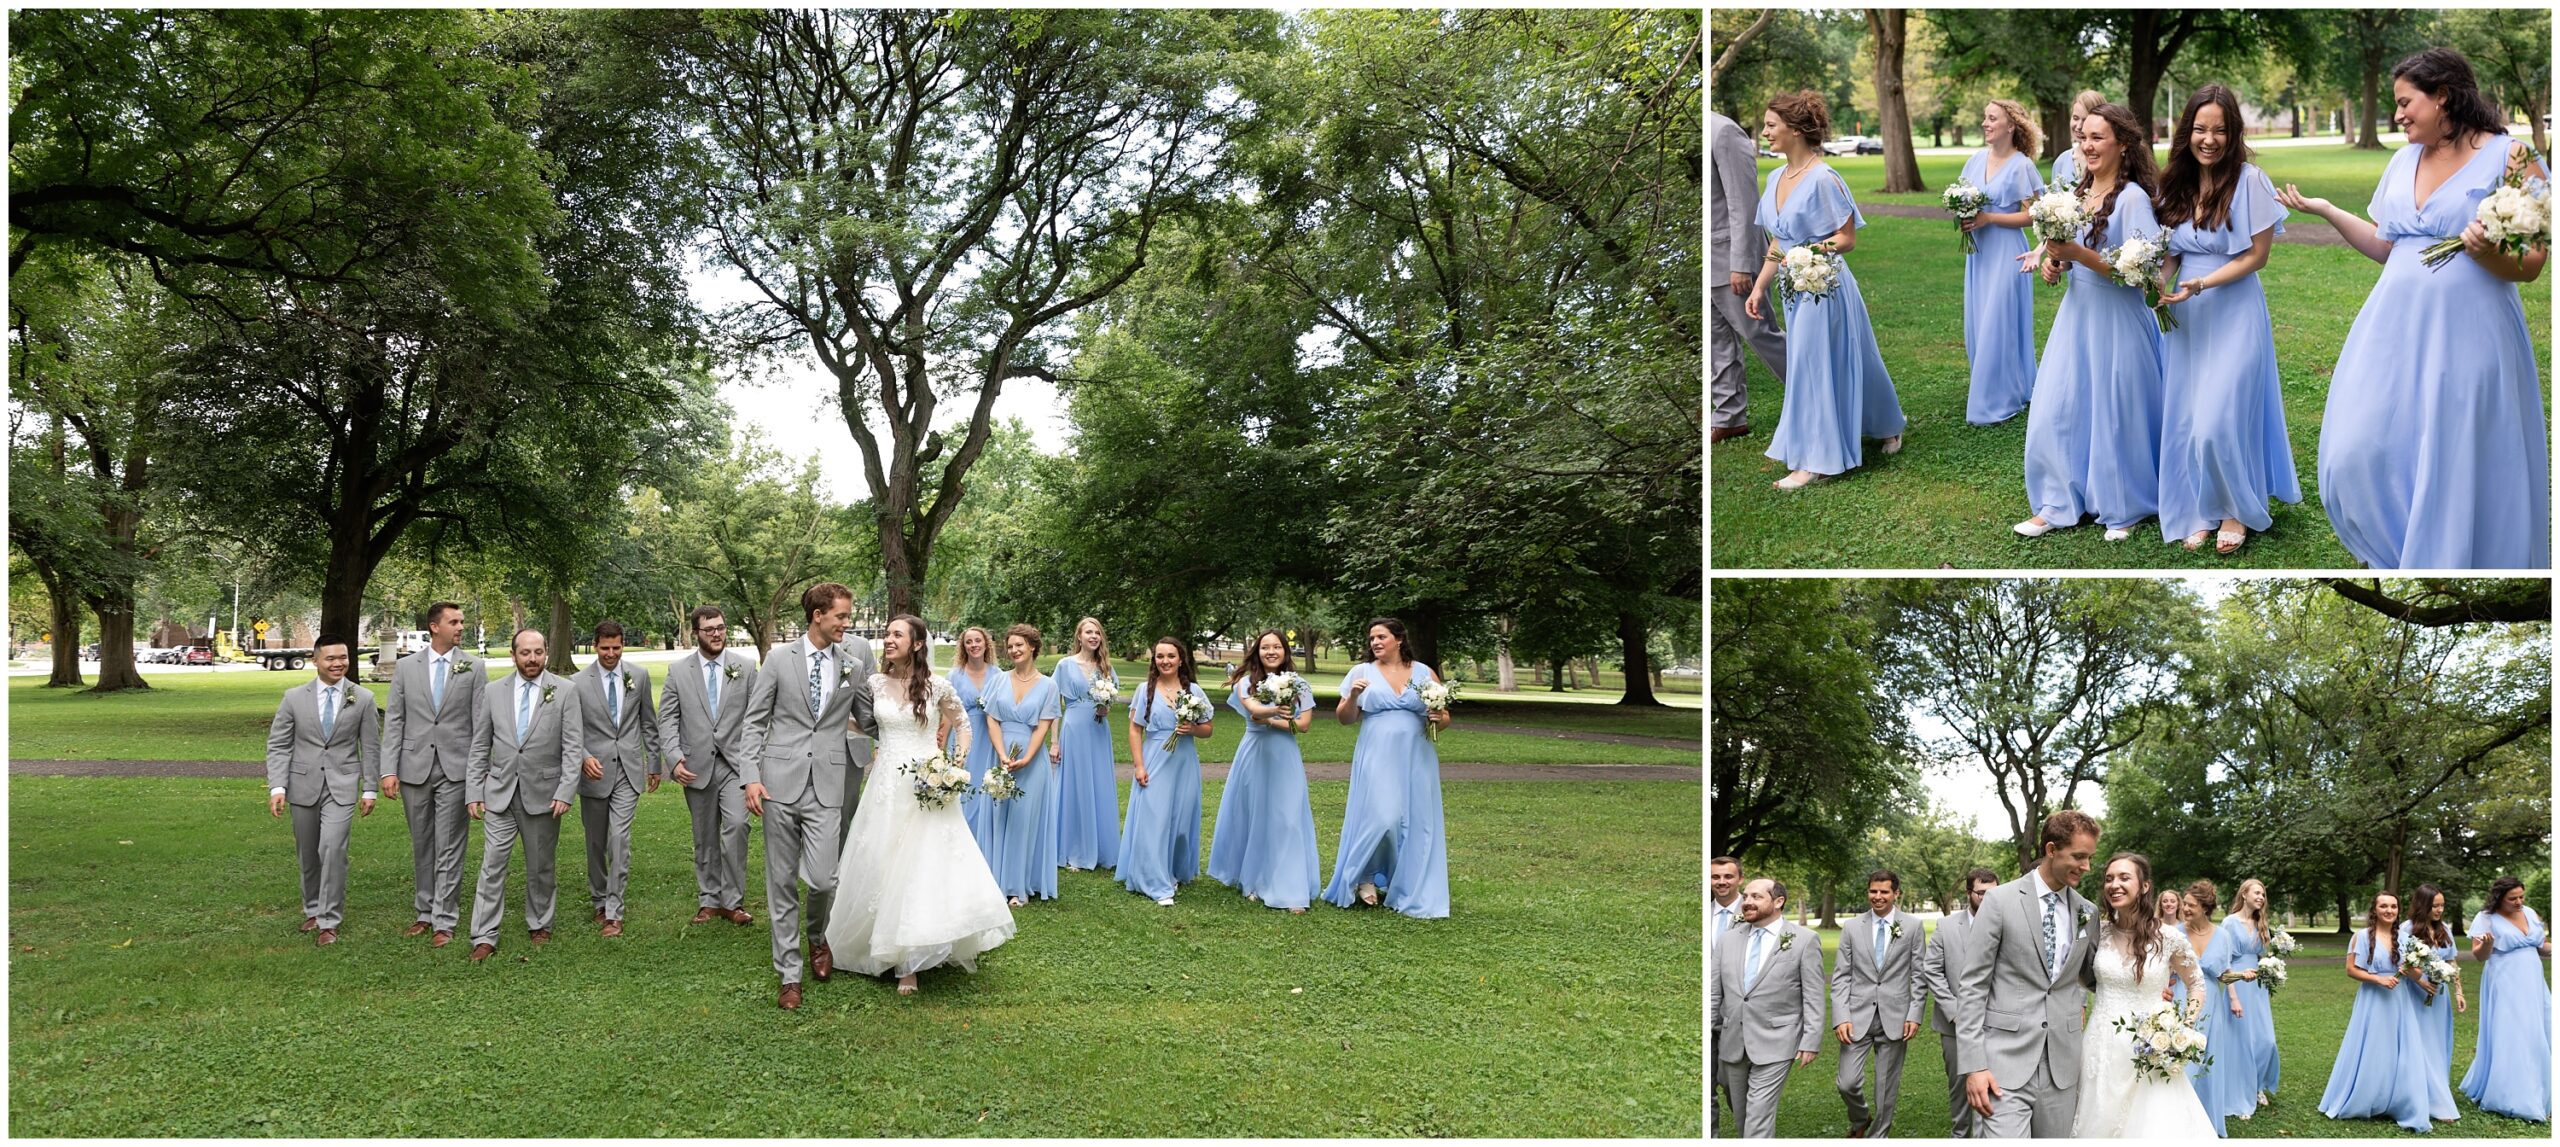 Allegheny Commons Park Wedding Photos by Pittsburgh Wedding Photographer Catherine Acevedo Photography